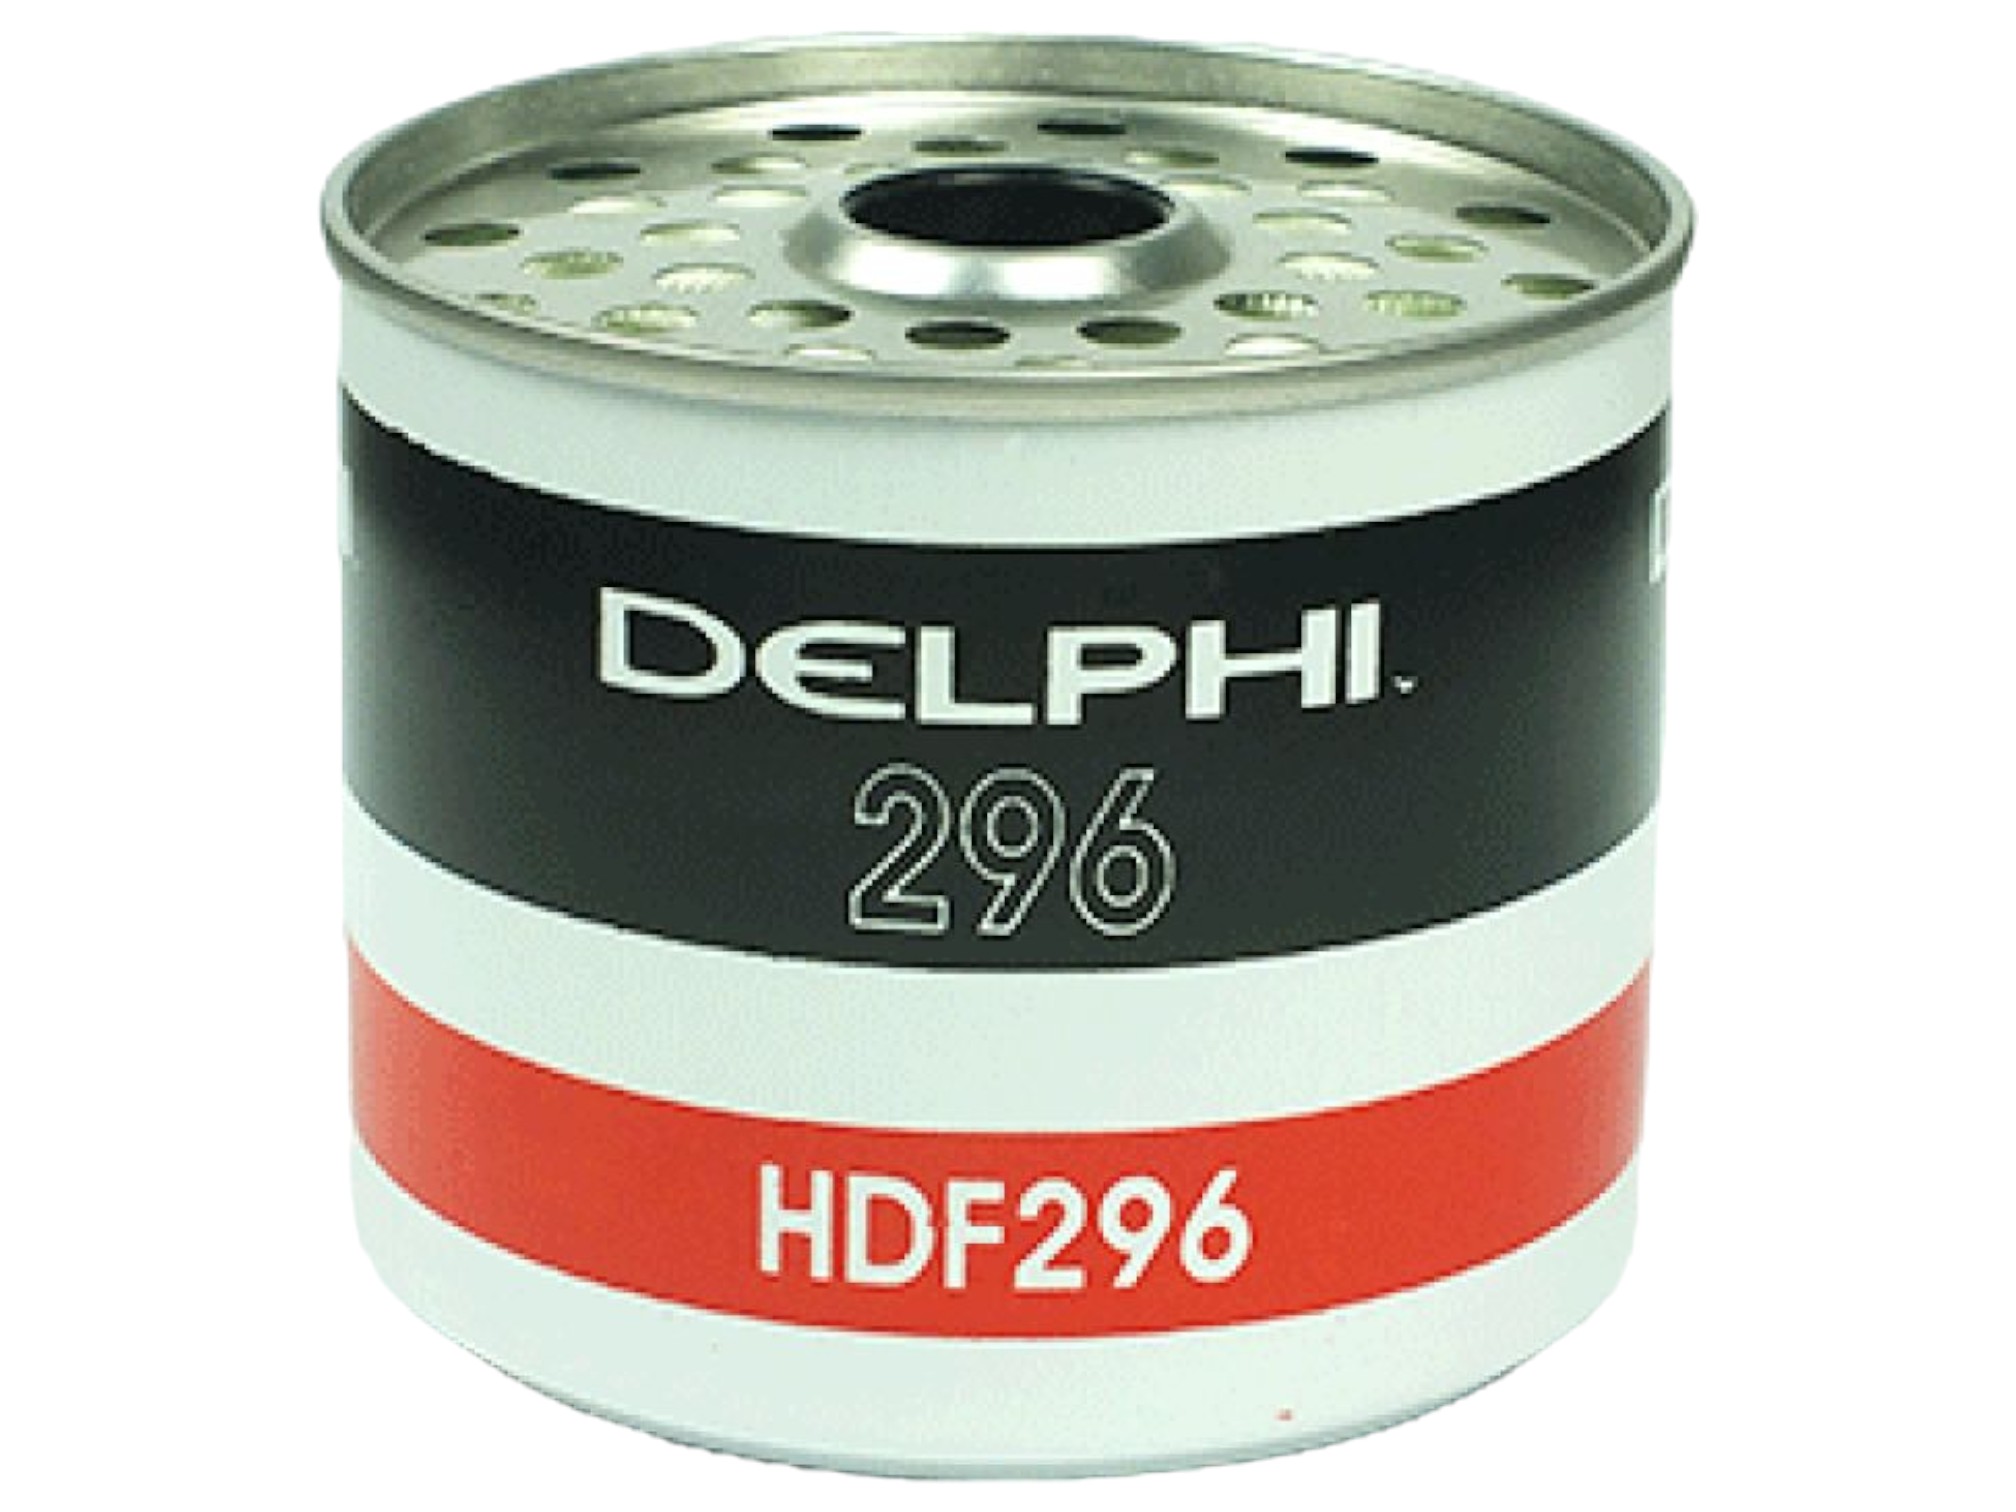 Delphi Dieselfilter Ersatzkartusche